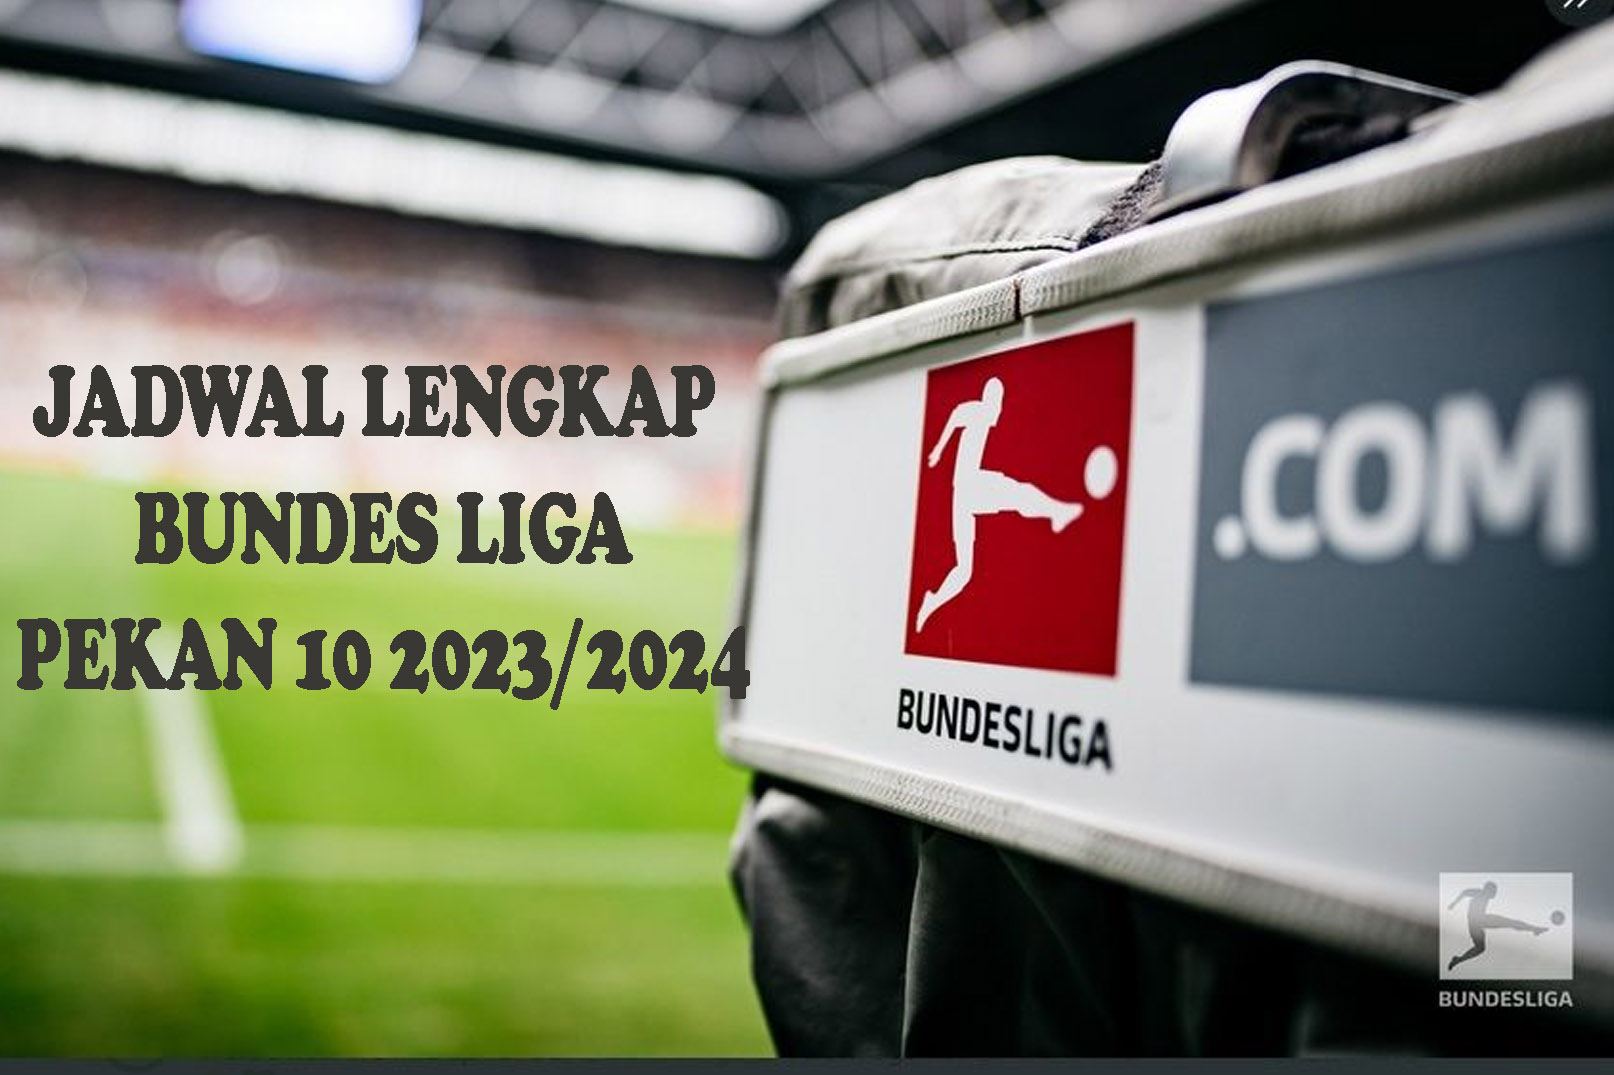 Jadwal Lengkap Pertandingan Bundesliga 2023-24 Pekan 10 Serta Hasil Klasemen Sementara, Cek Disini